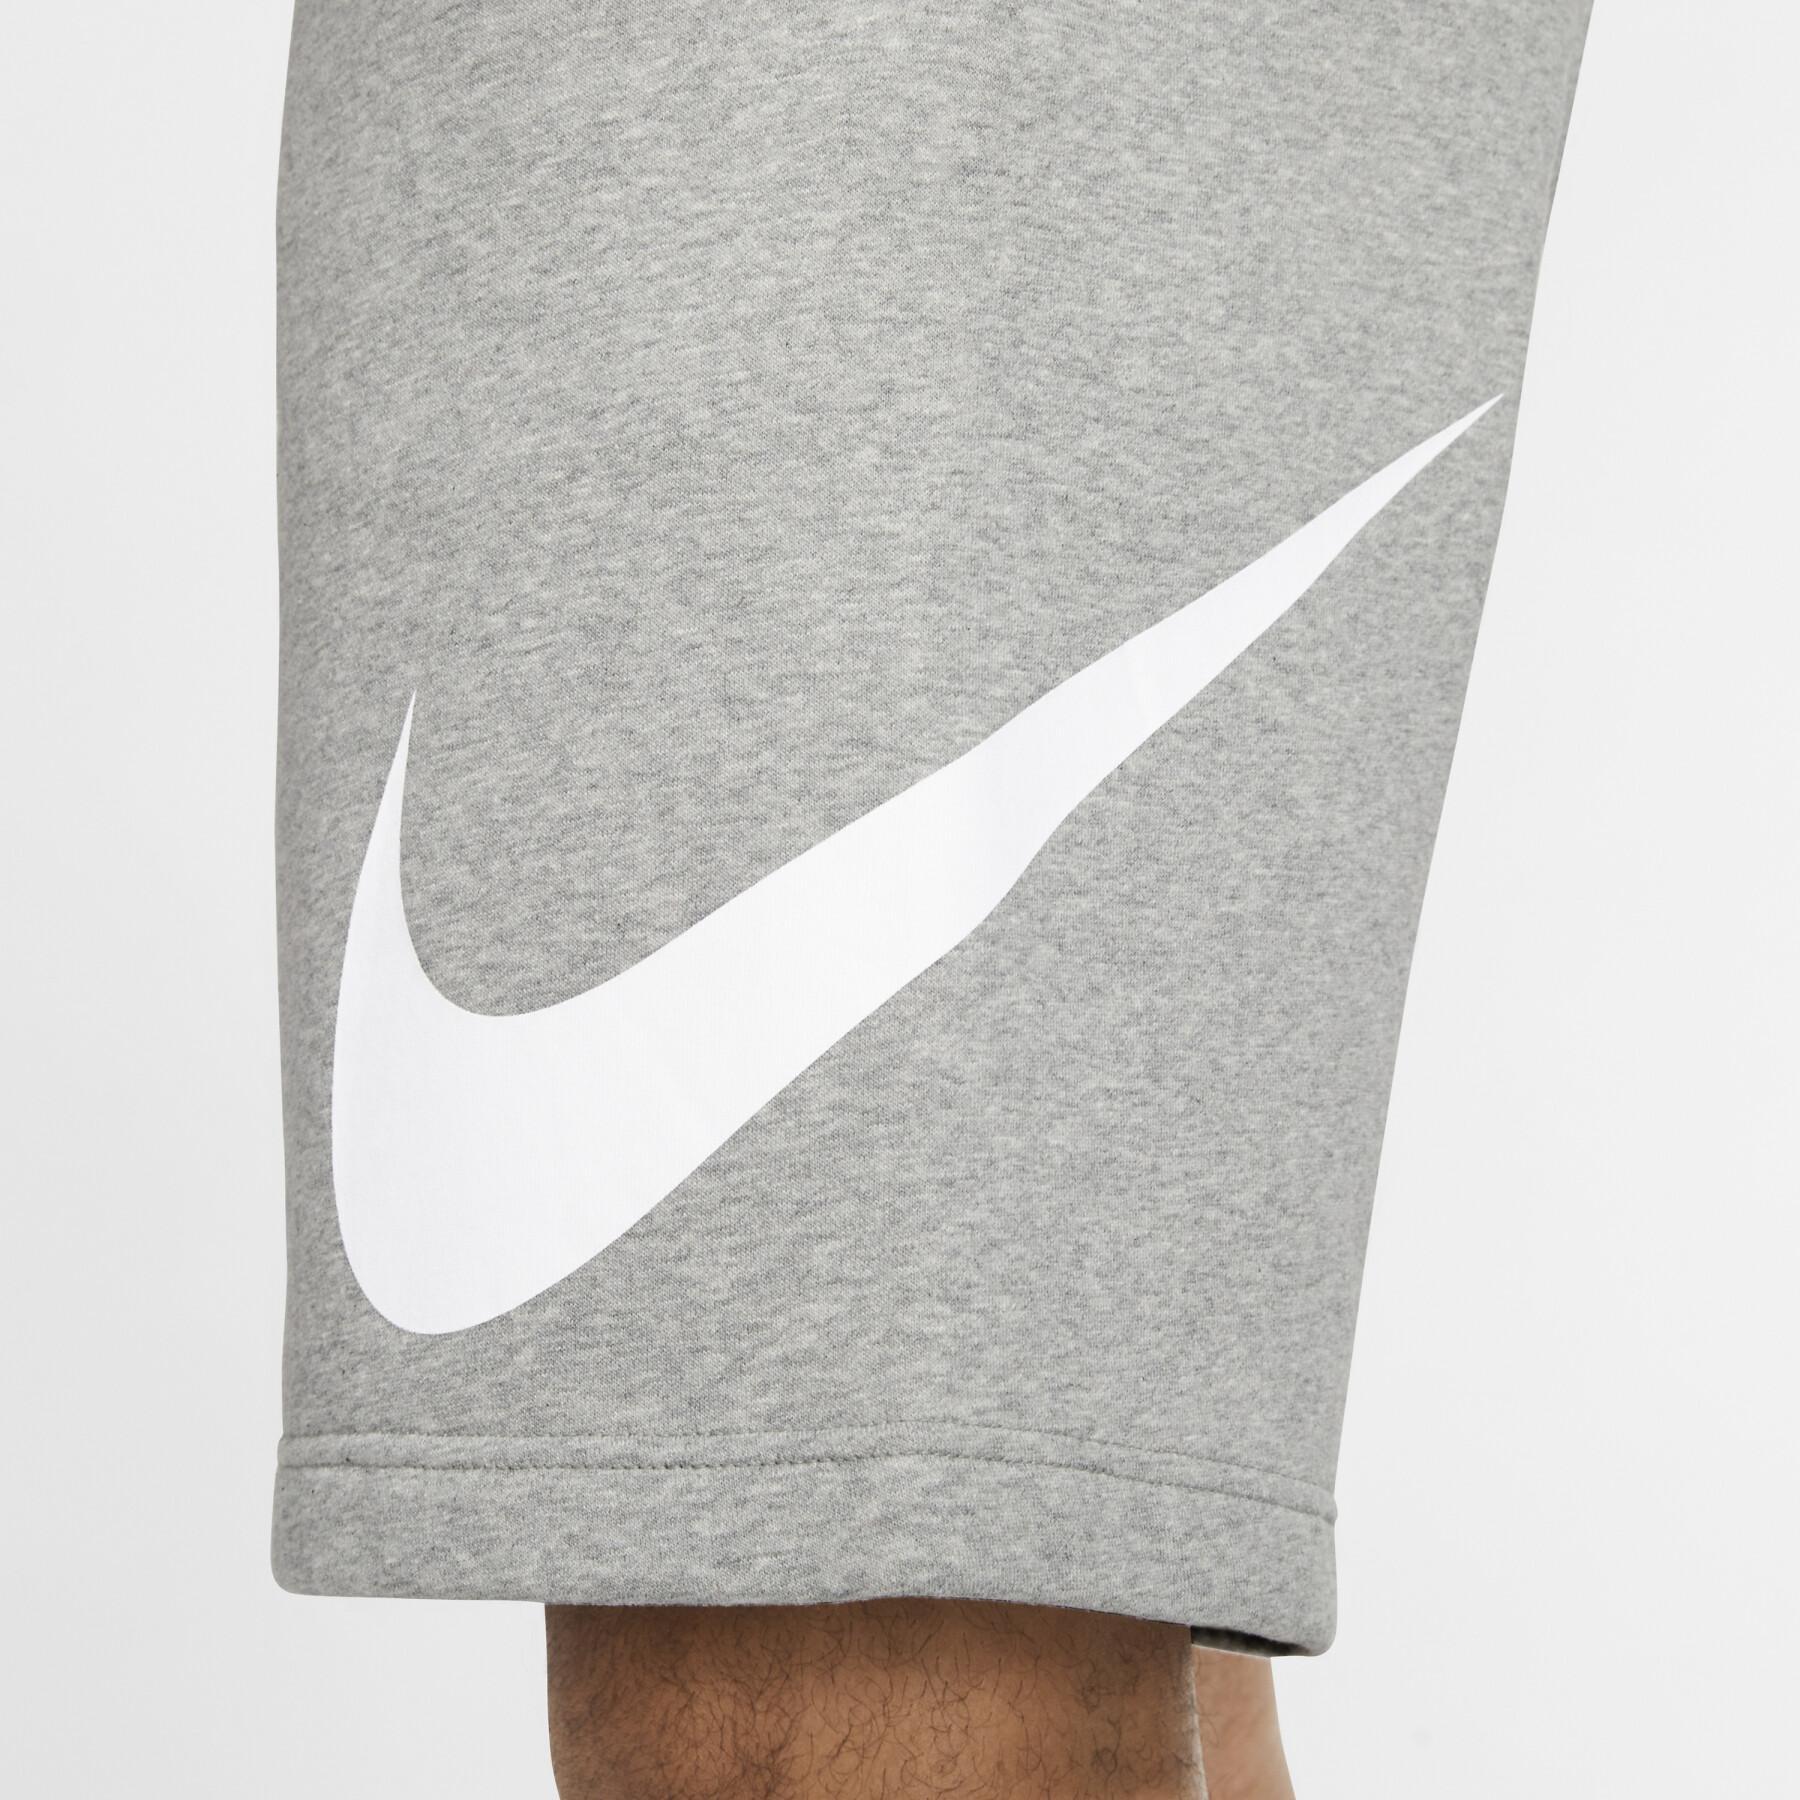 Kort Nike Sportswear Club